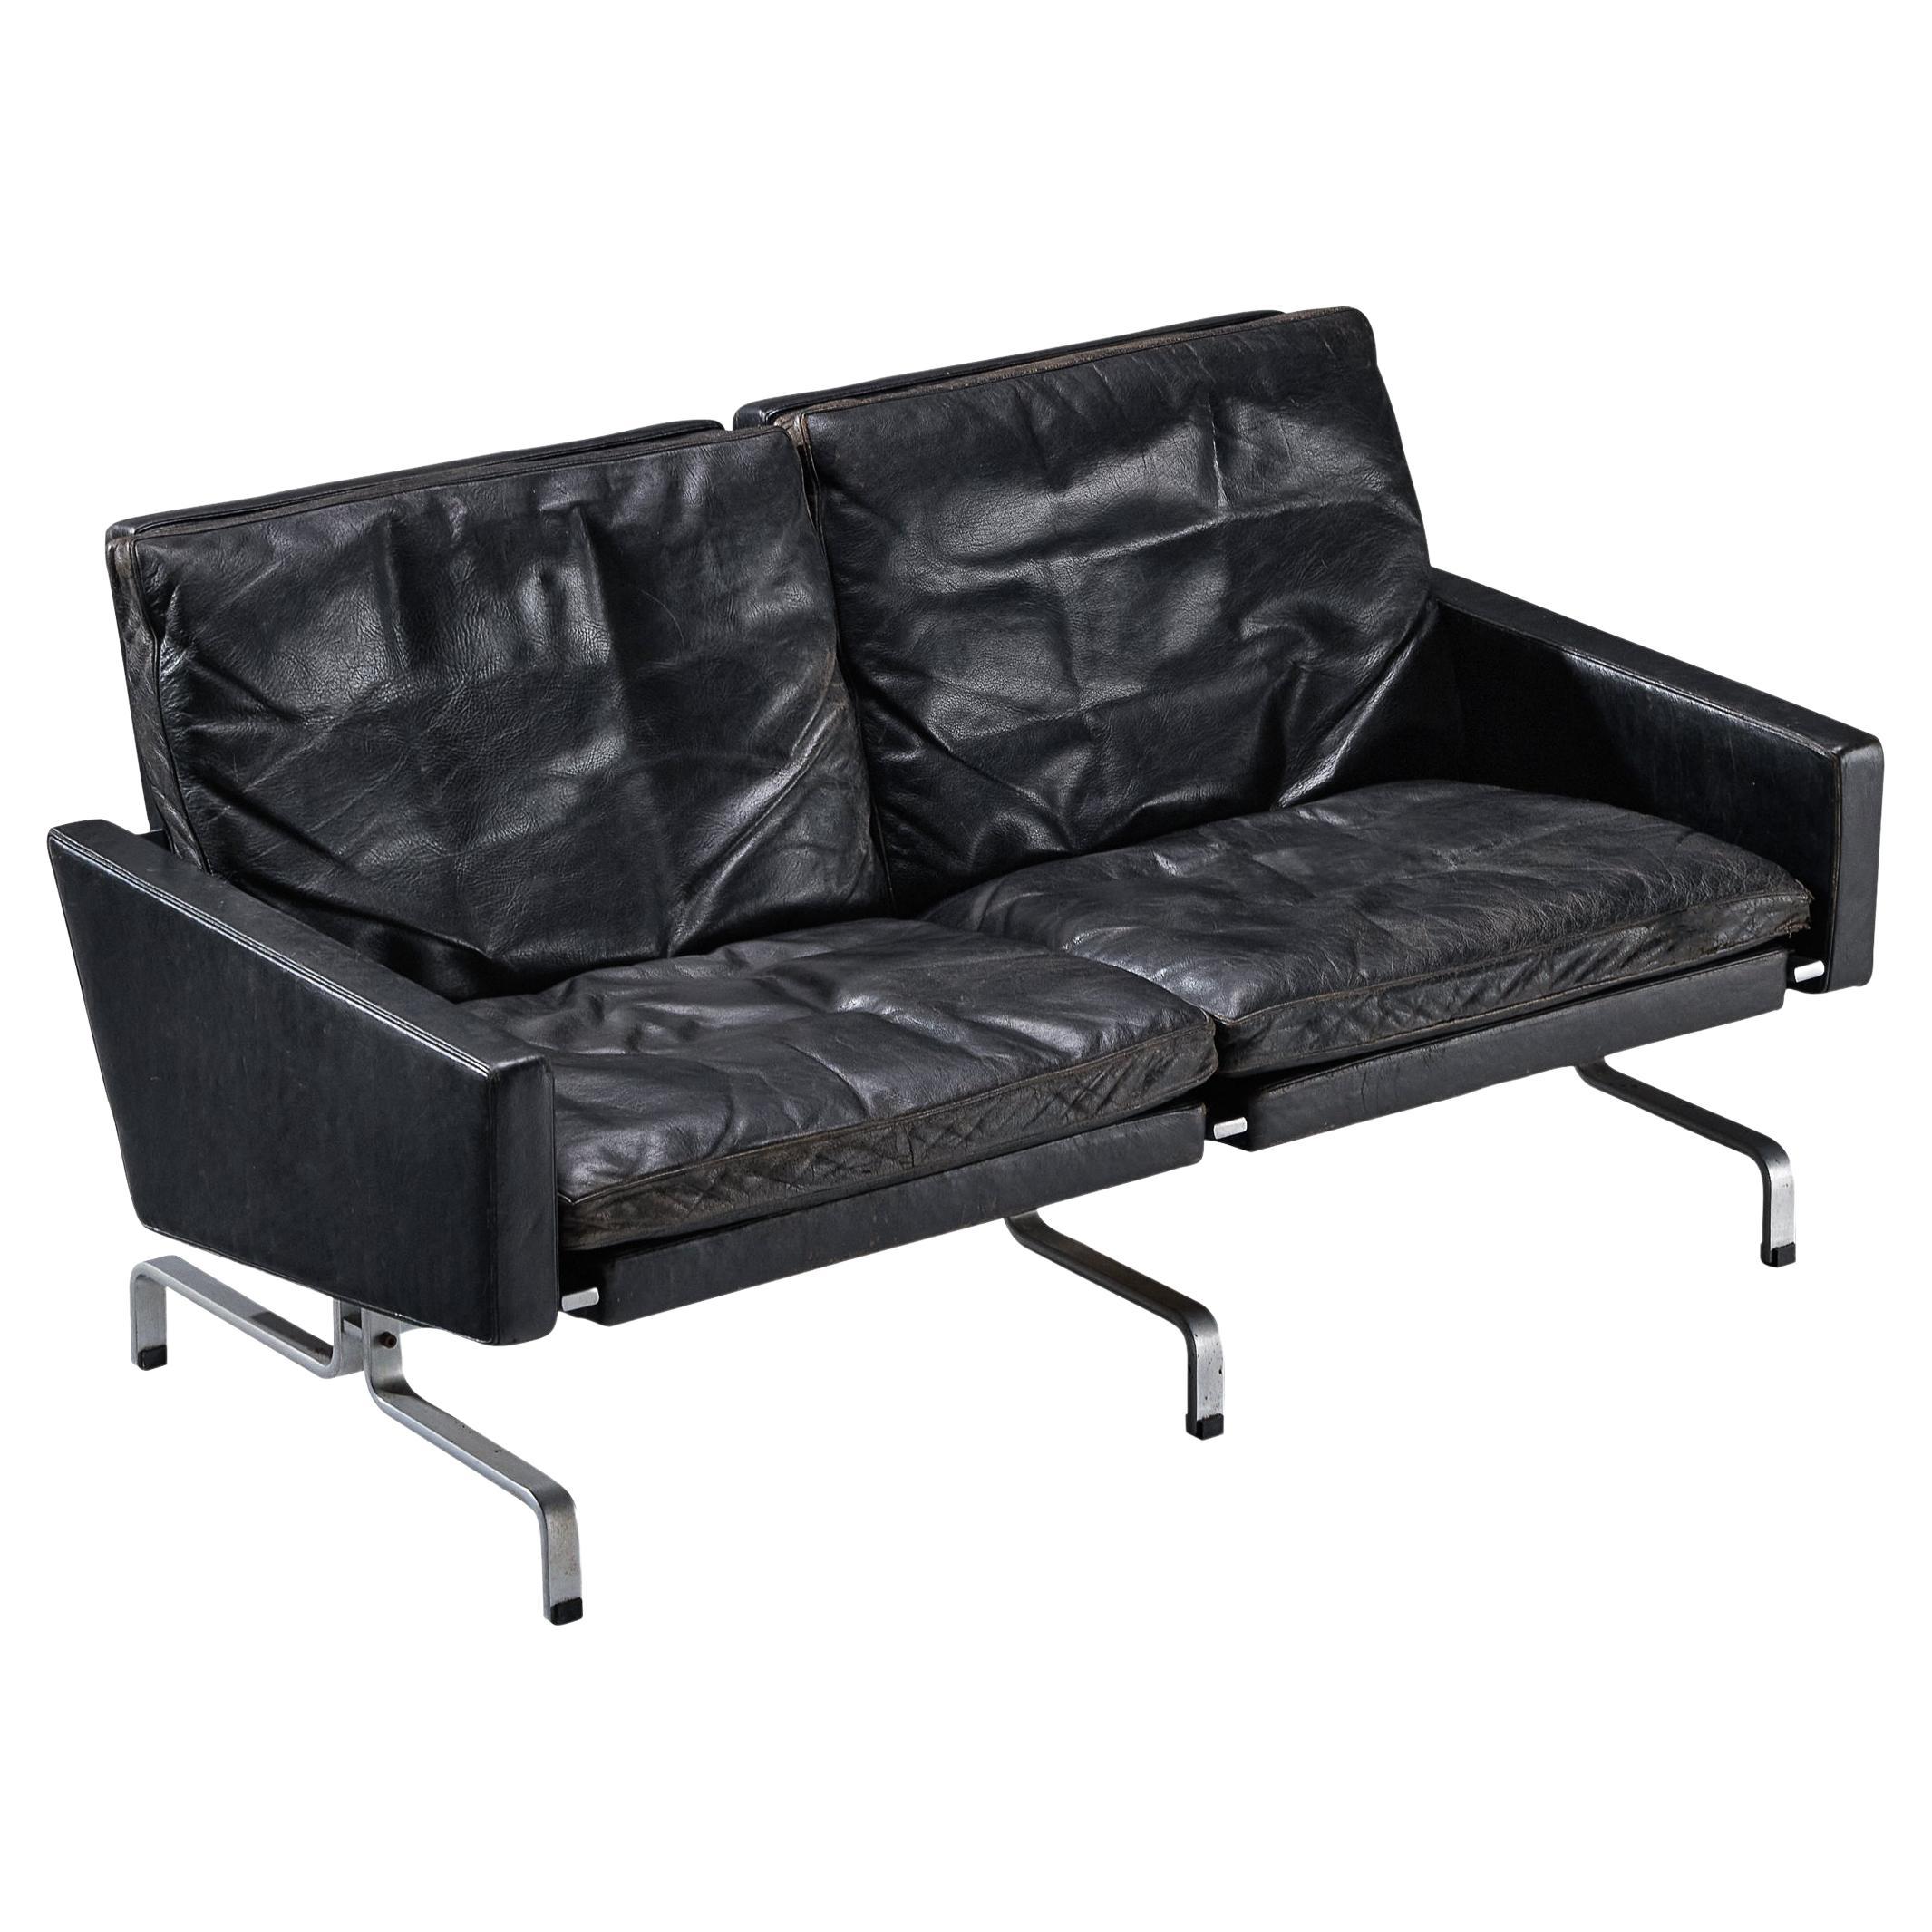 Poul Kjaerholm 'PK31' Sofa in Black Leather For Sale